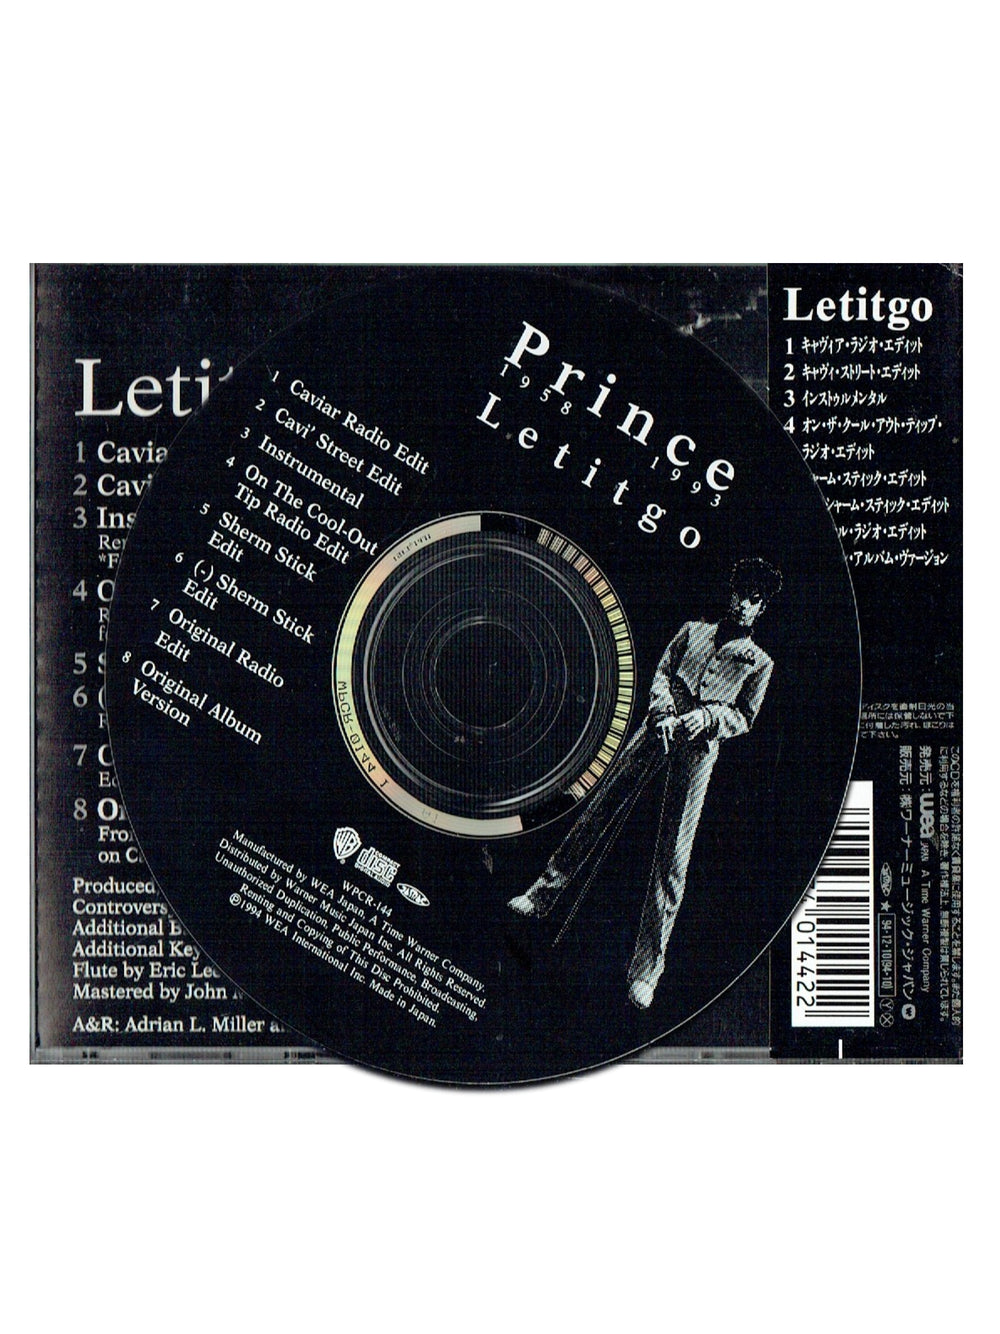 Prince – Letitgo Maxi CD Single 1994 Original JAPAN Release 8 Tracks With OBI